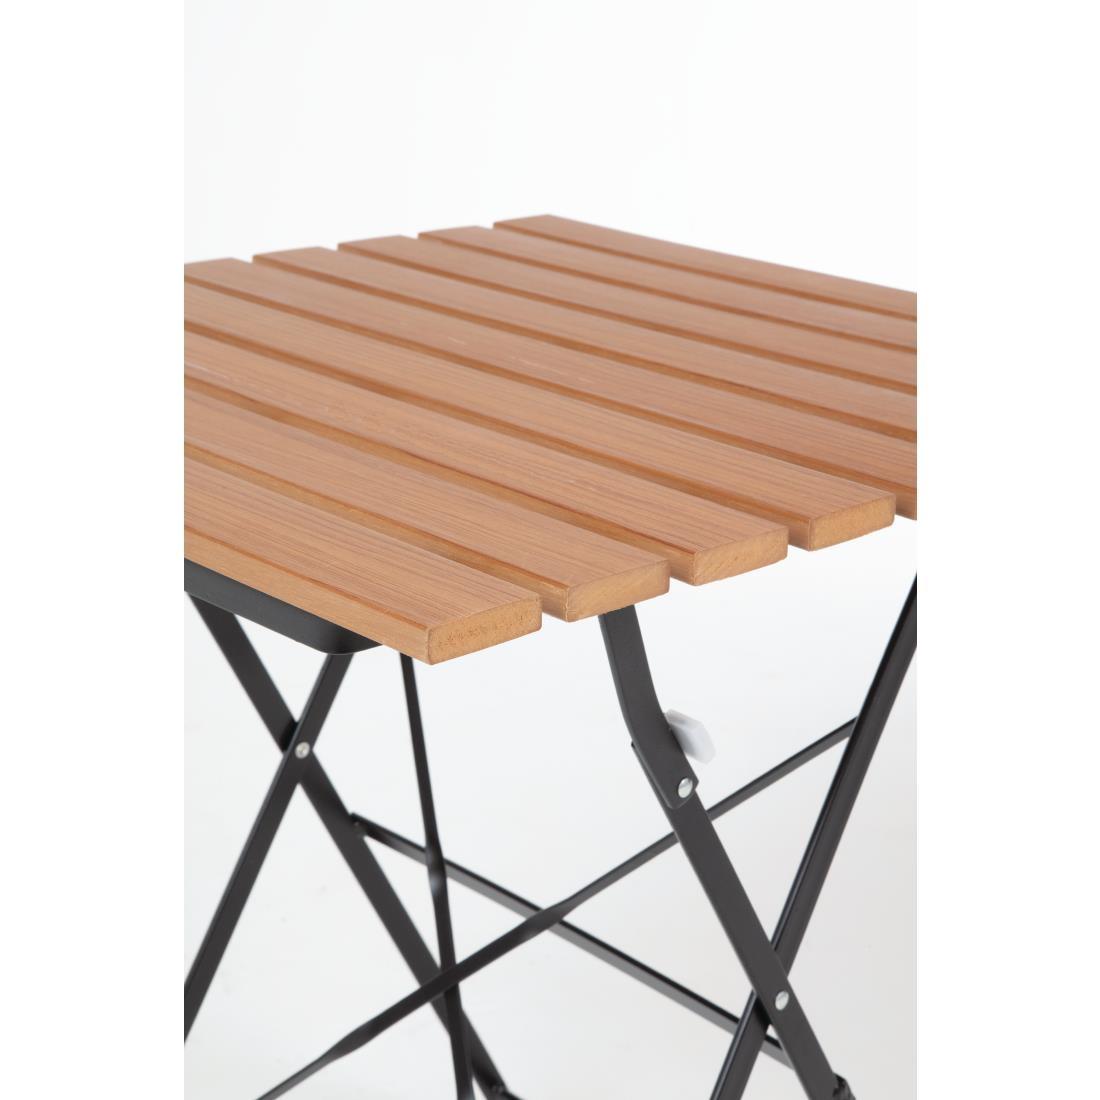 Bolero Square Faux Wood Bistro Folding Table 600mm (Single) - GJ765  - 7